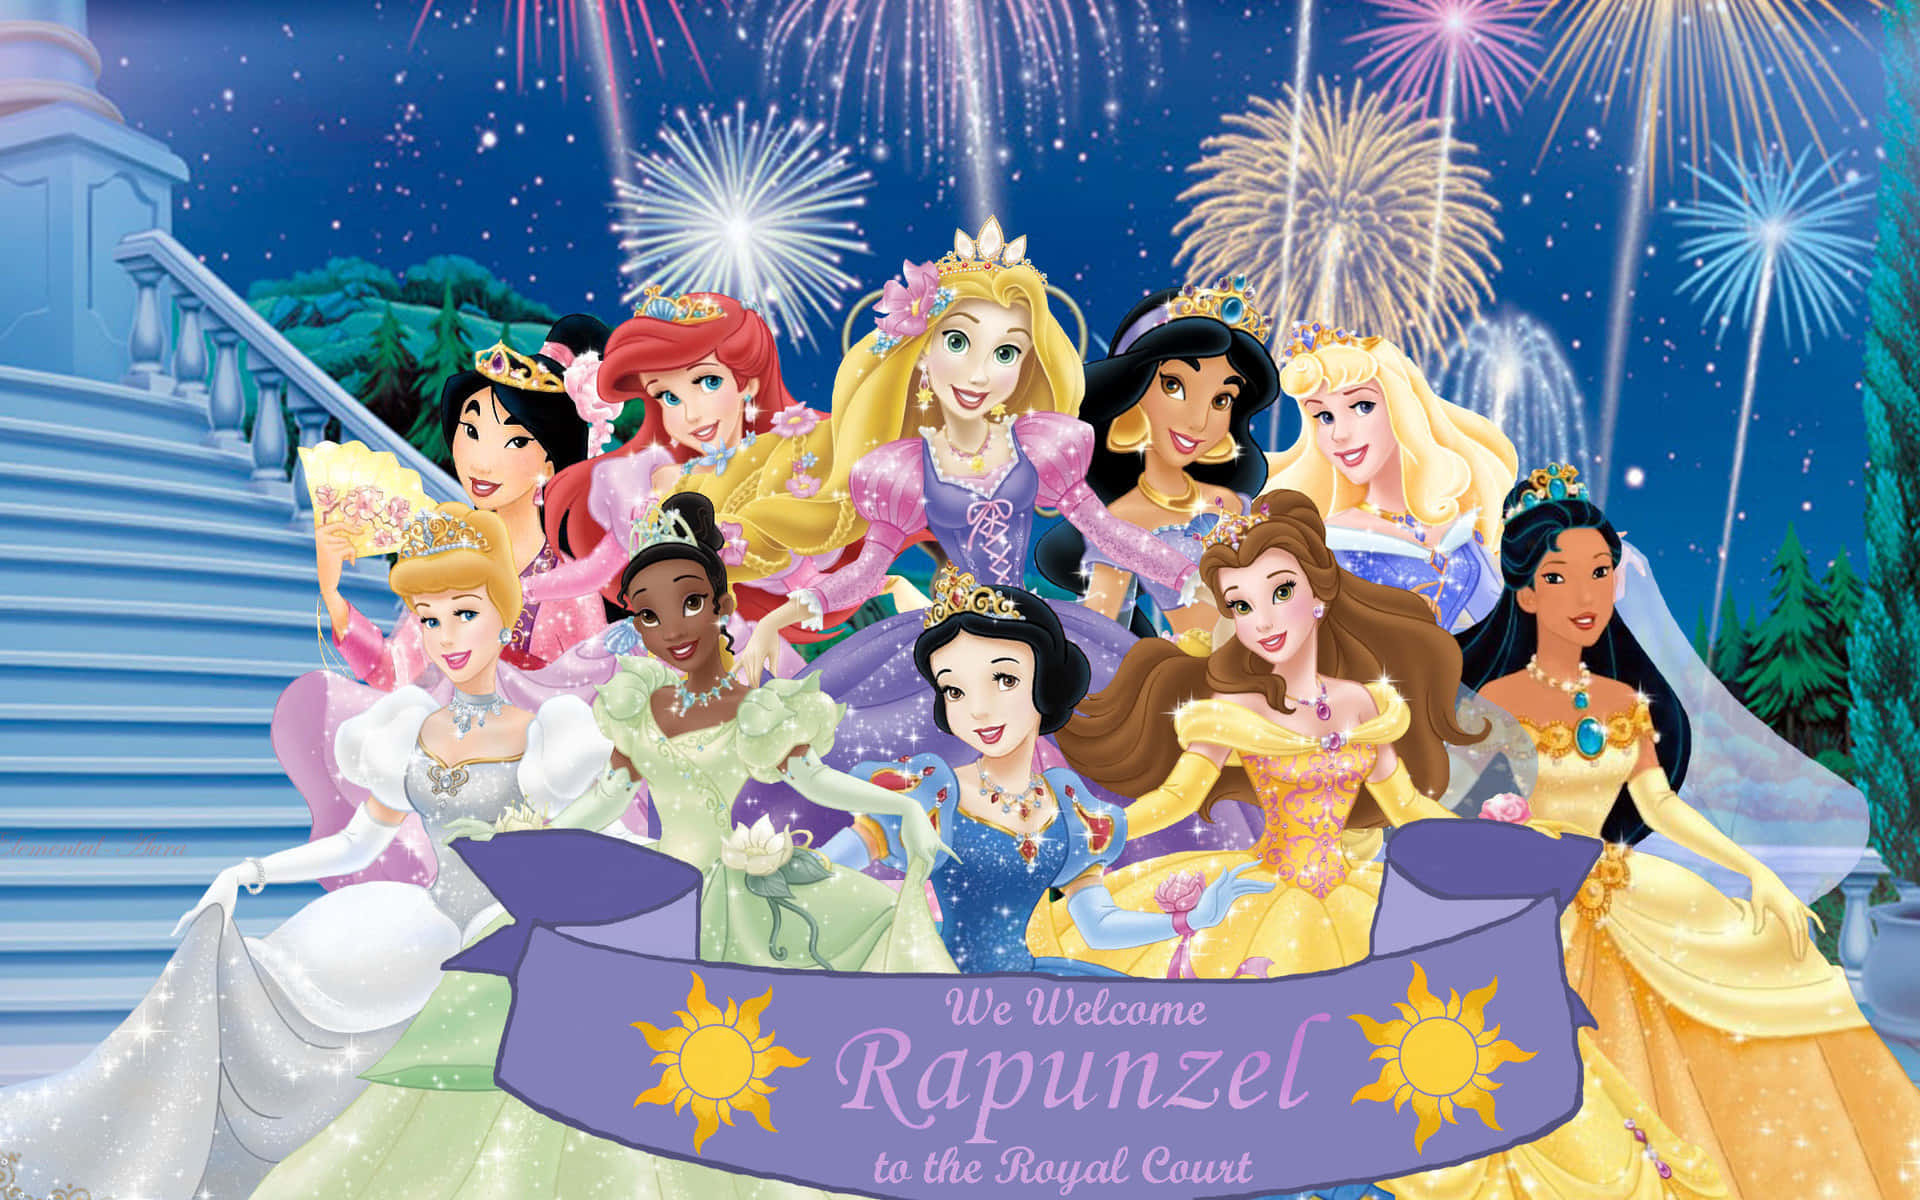 "Experience magic with Disney Princesses!"